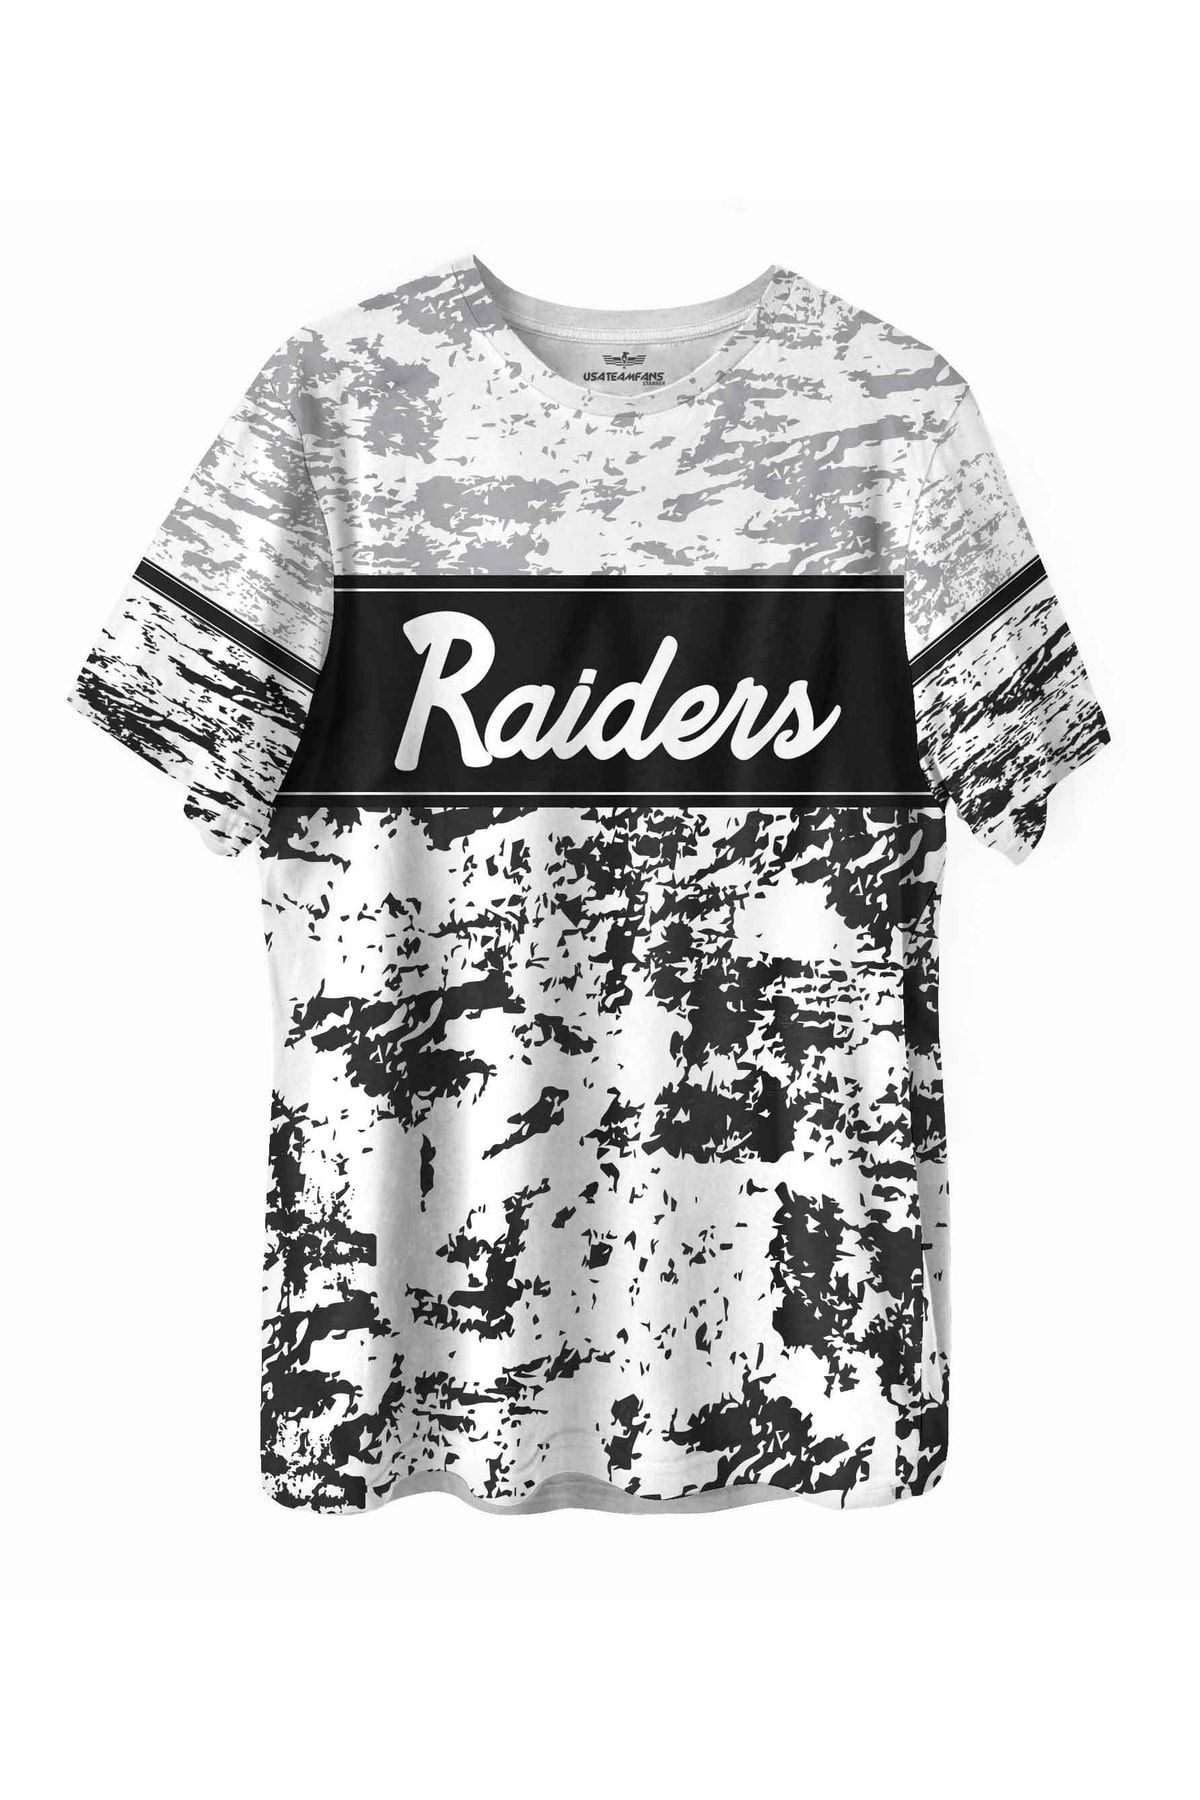 Usateamfans Raiders Oversize Tshirt